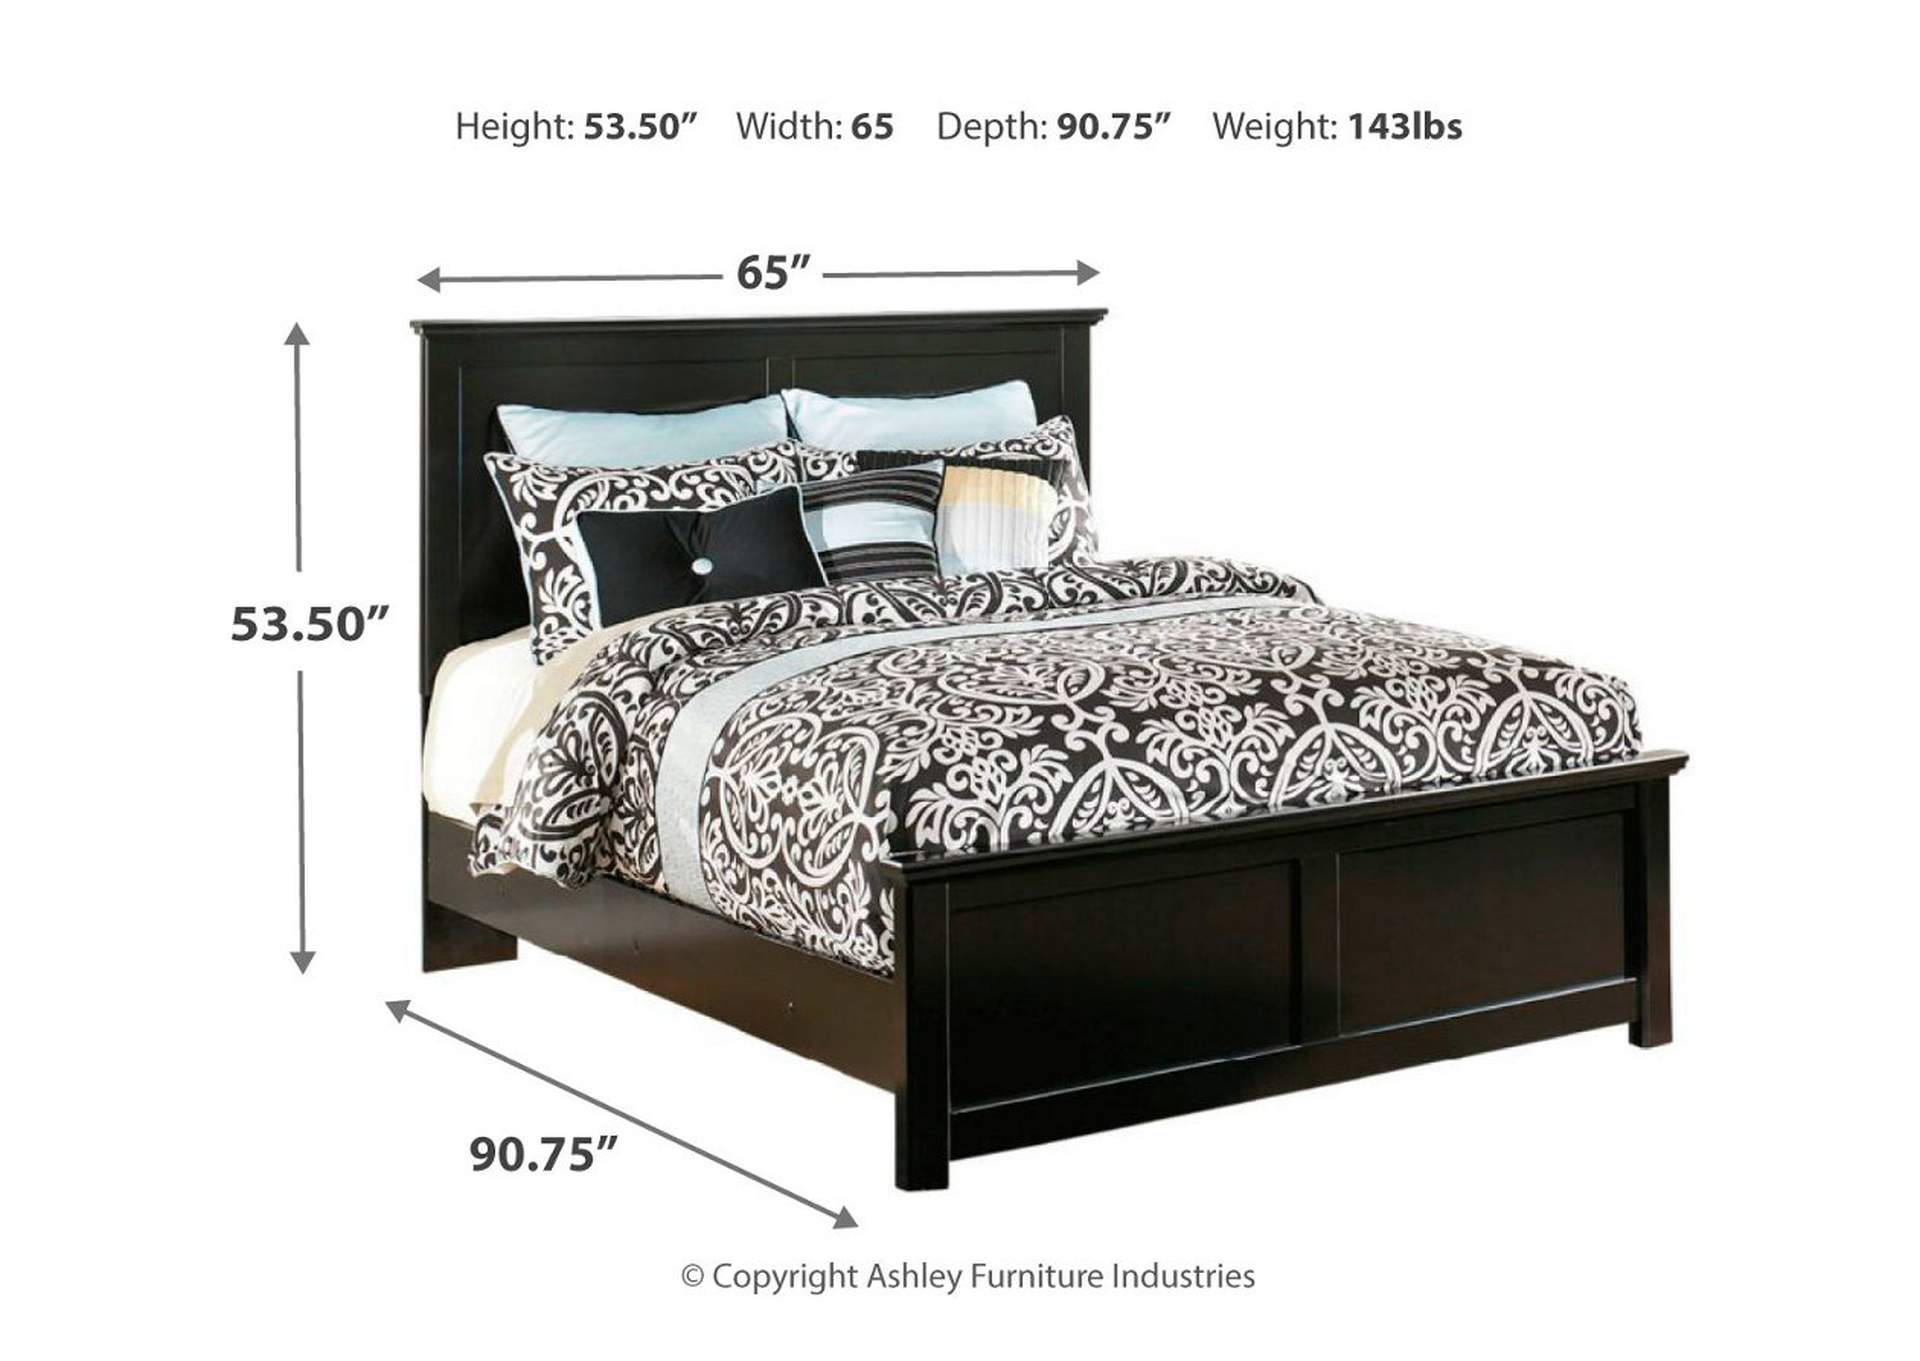 Maribel King Panel Bed,Signature Design By Ashley